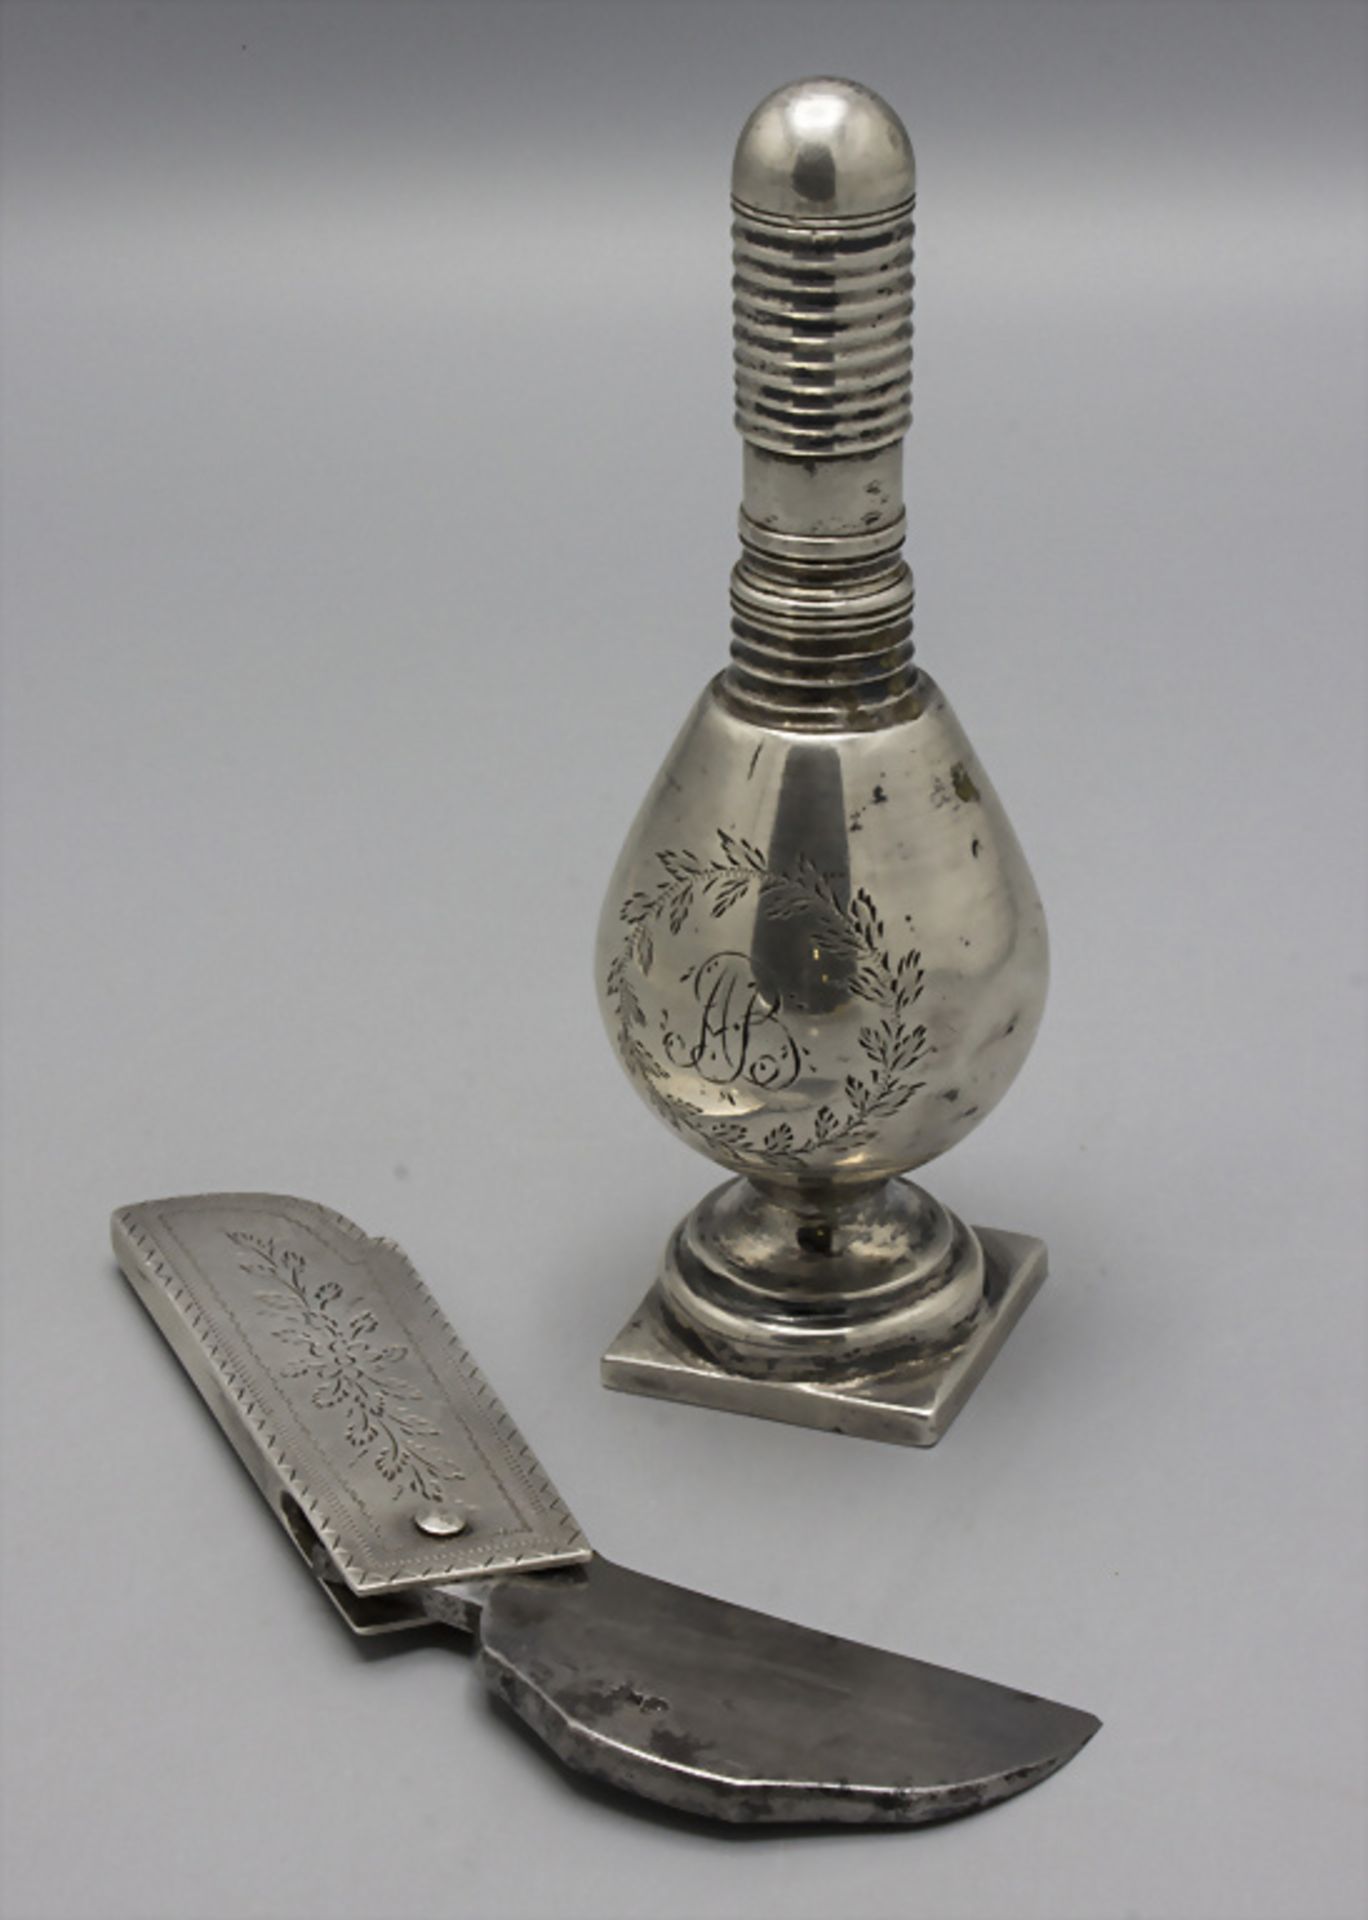 Brit Mila Beschneidungsmesser und Puderdose / A brit milah circumcision knife and powder compact